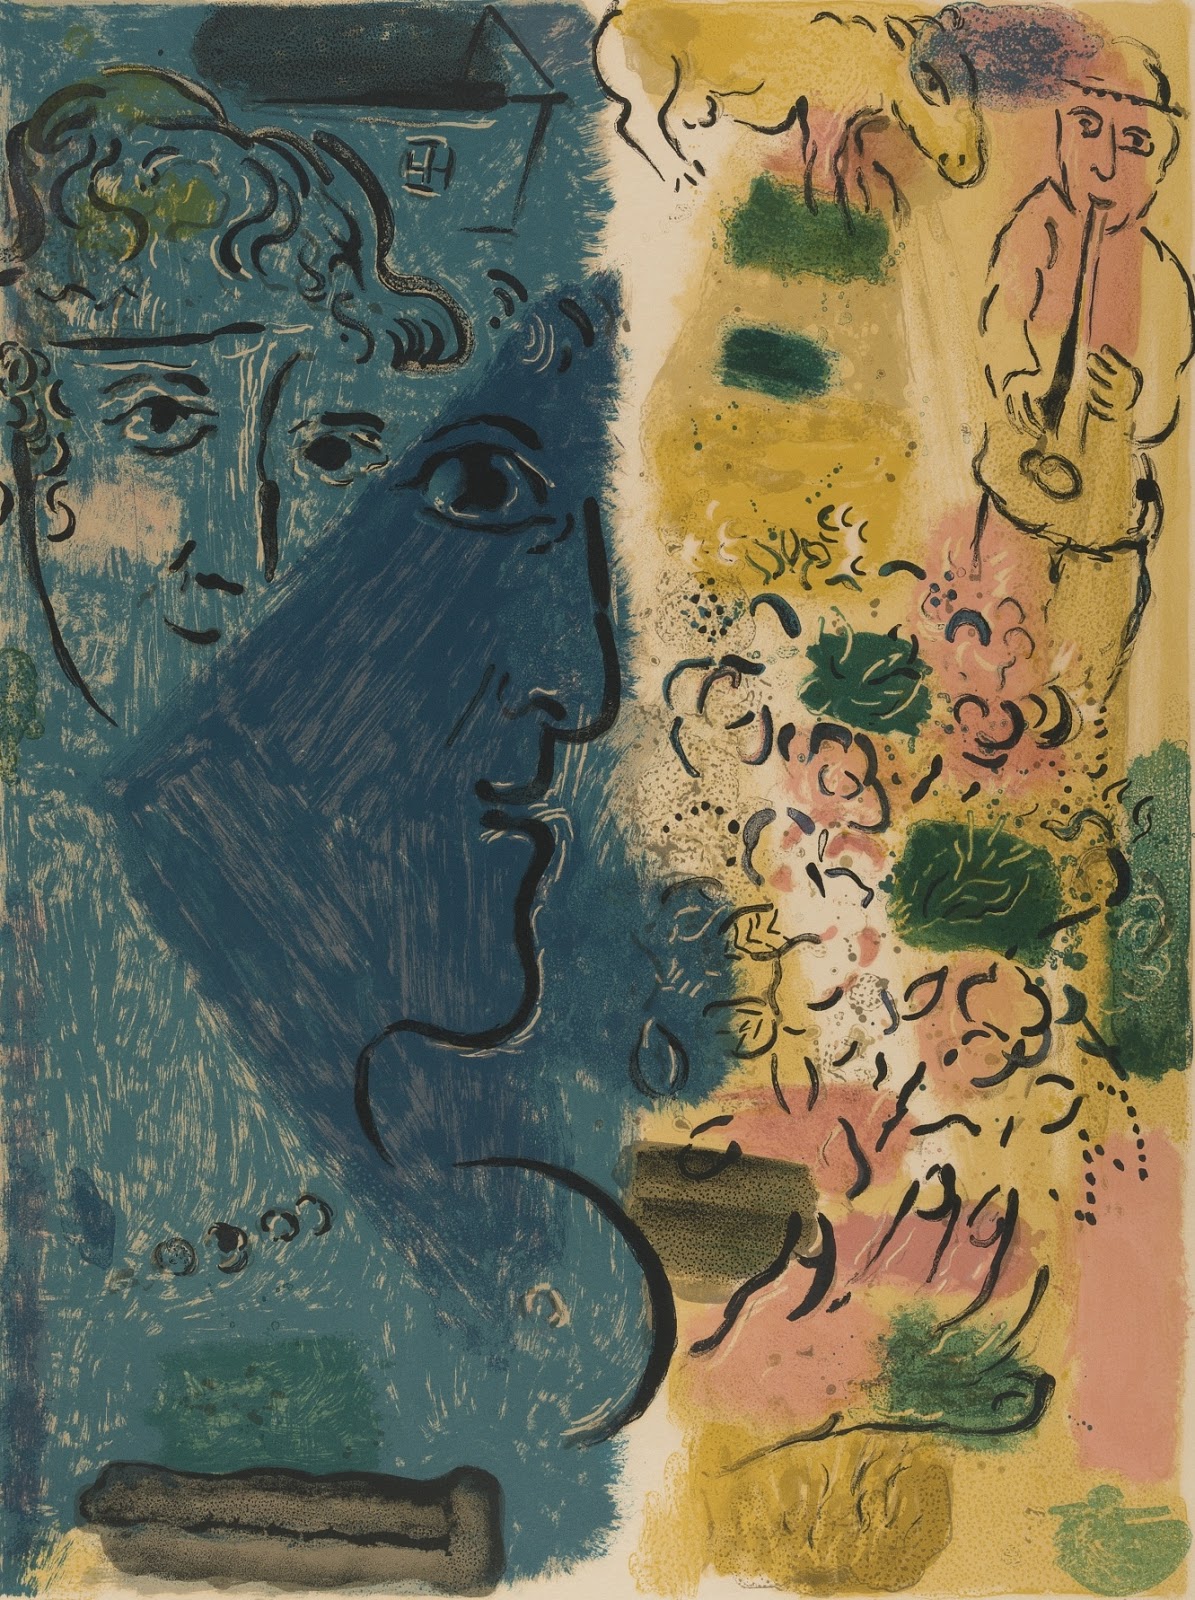 Marc+Chagall-1887-1985 (362).jpg